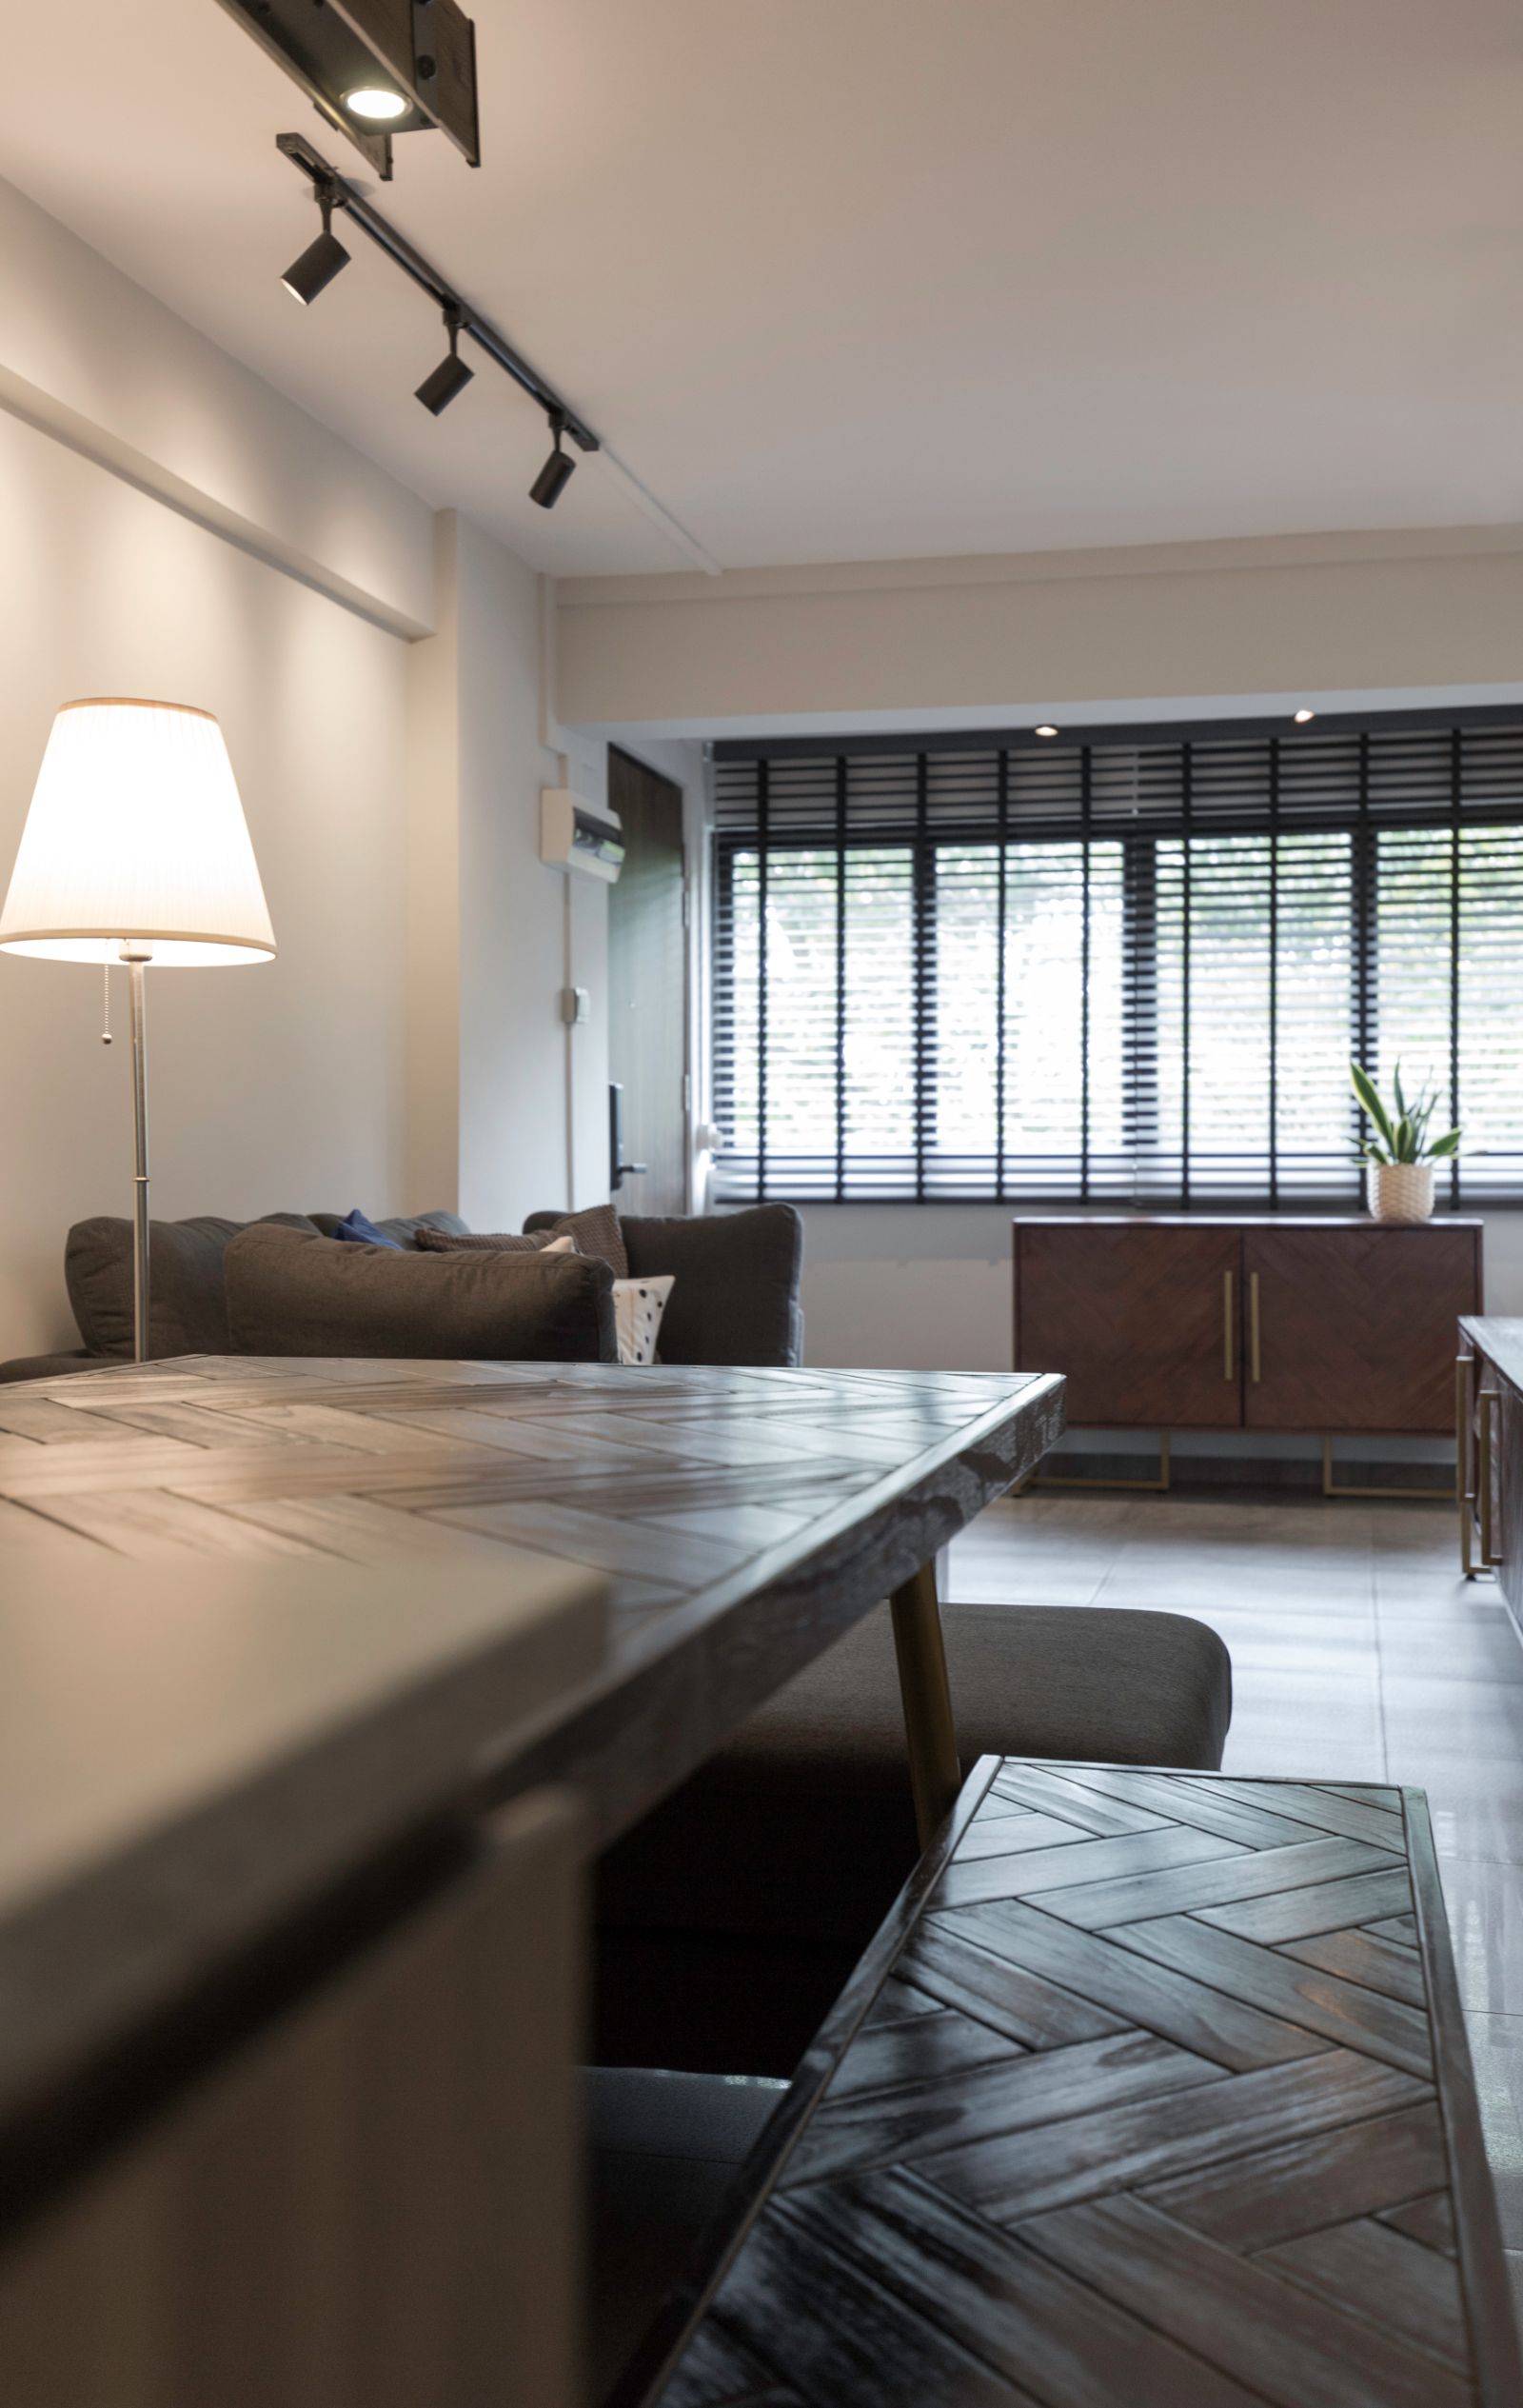 Eclectic, Industrial, Modern Design - Living Room - HDB 3 Room - Design by PRDT Pte Ltd